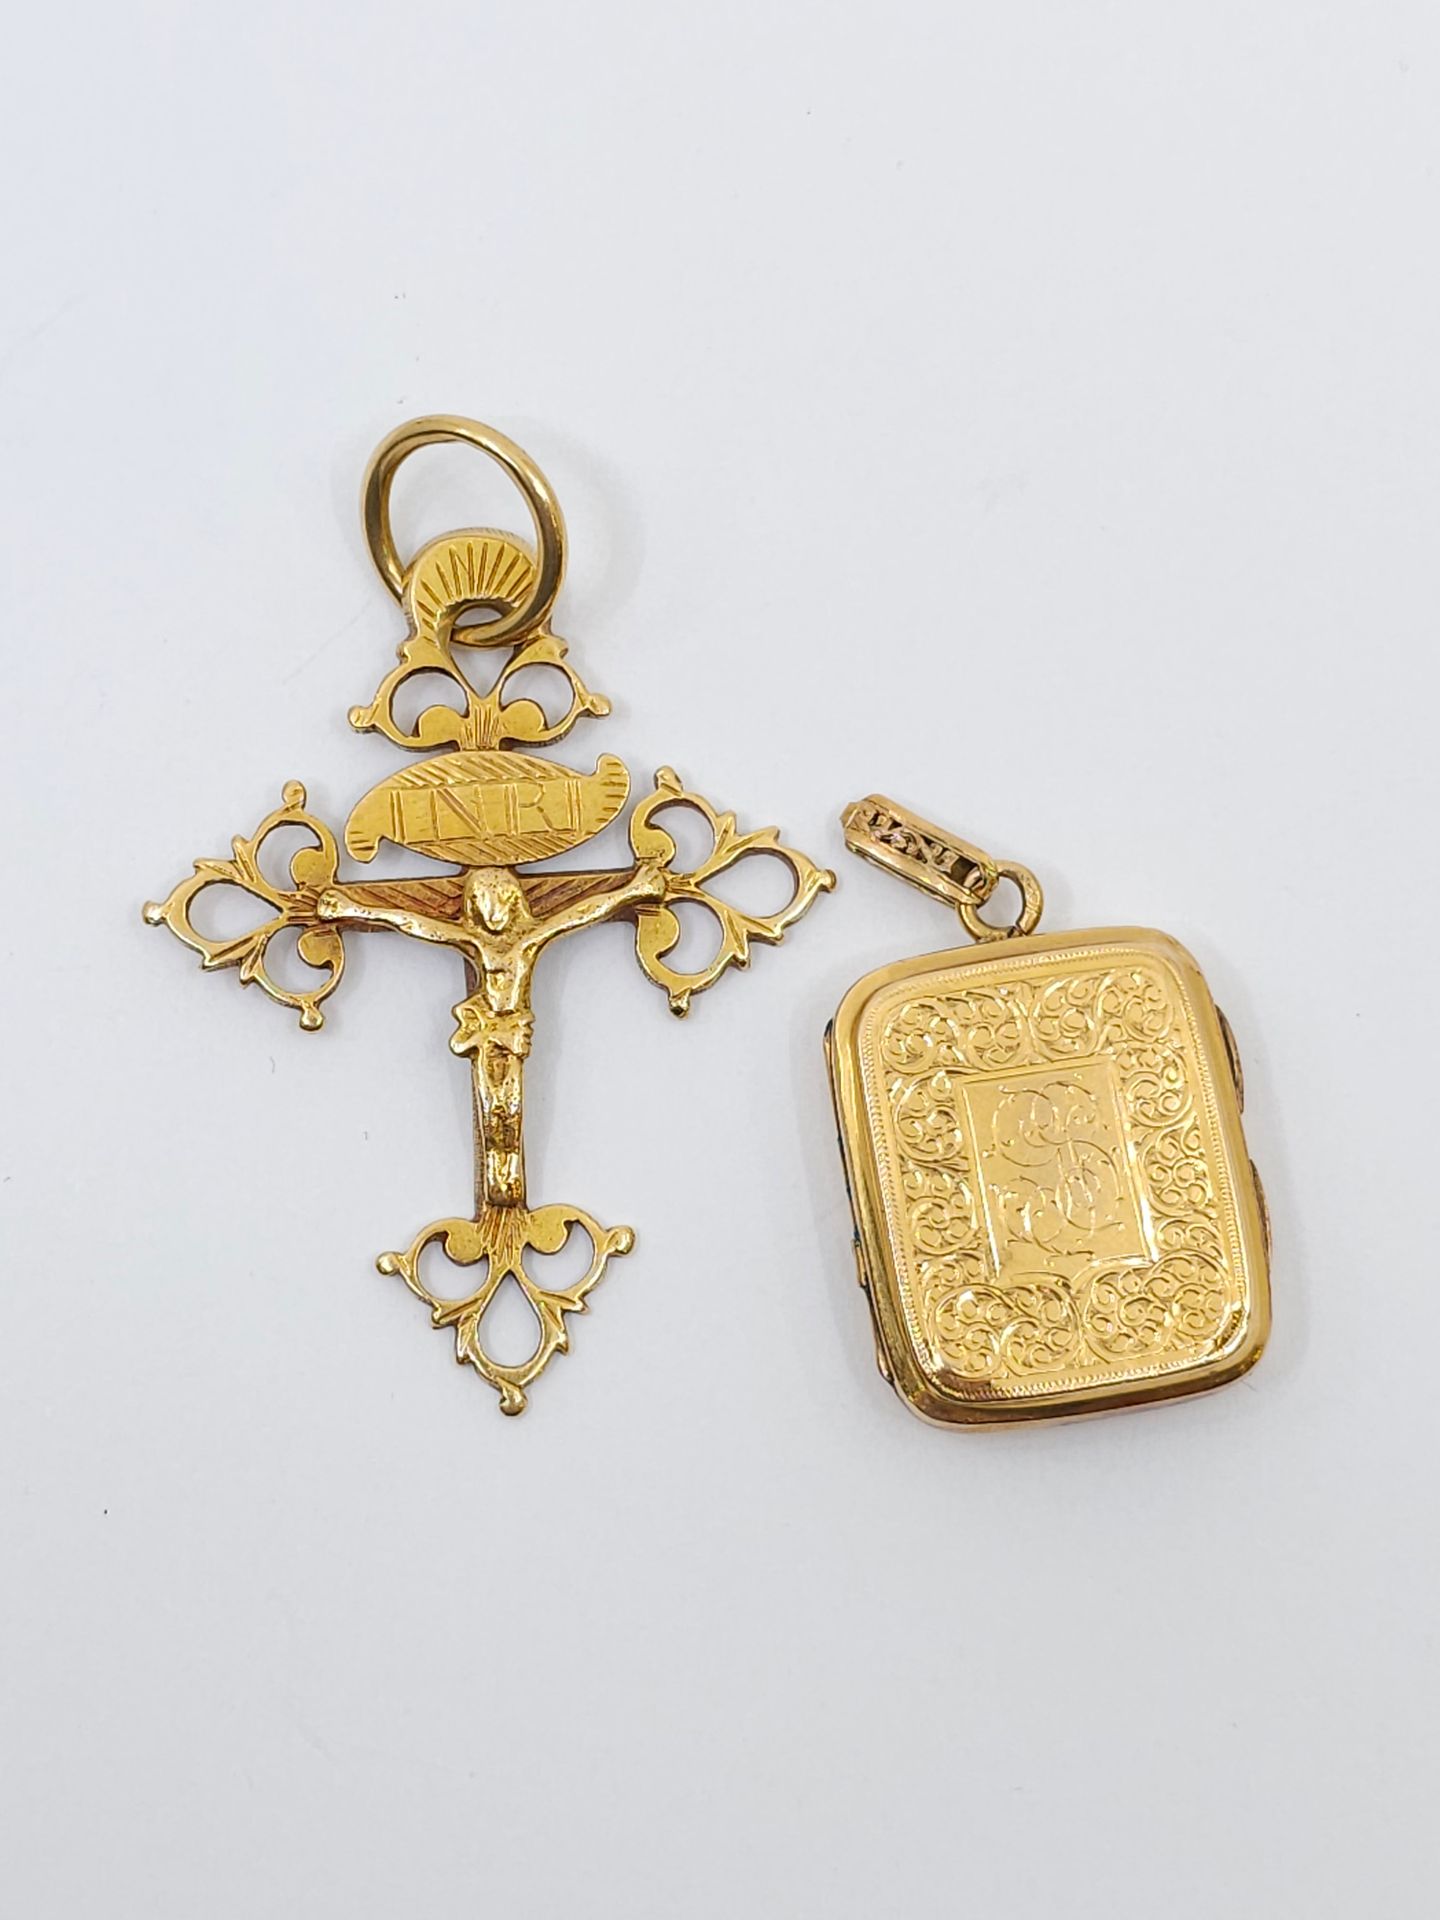 Null 一批750°的黄金包括：
金质十字架 
吊坠与纪念品架
重量 : 27,26 g